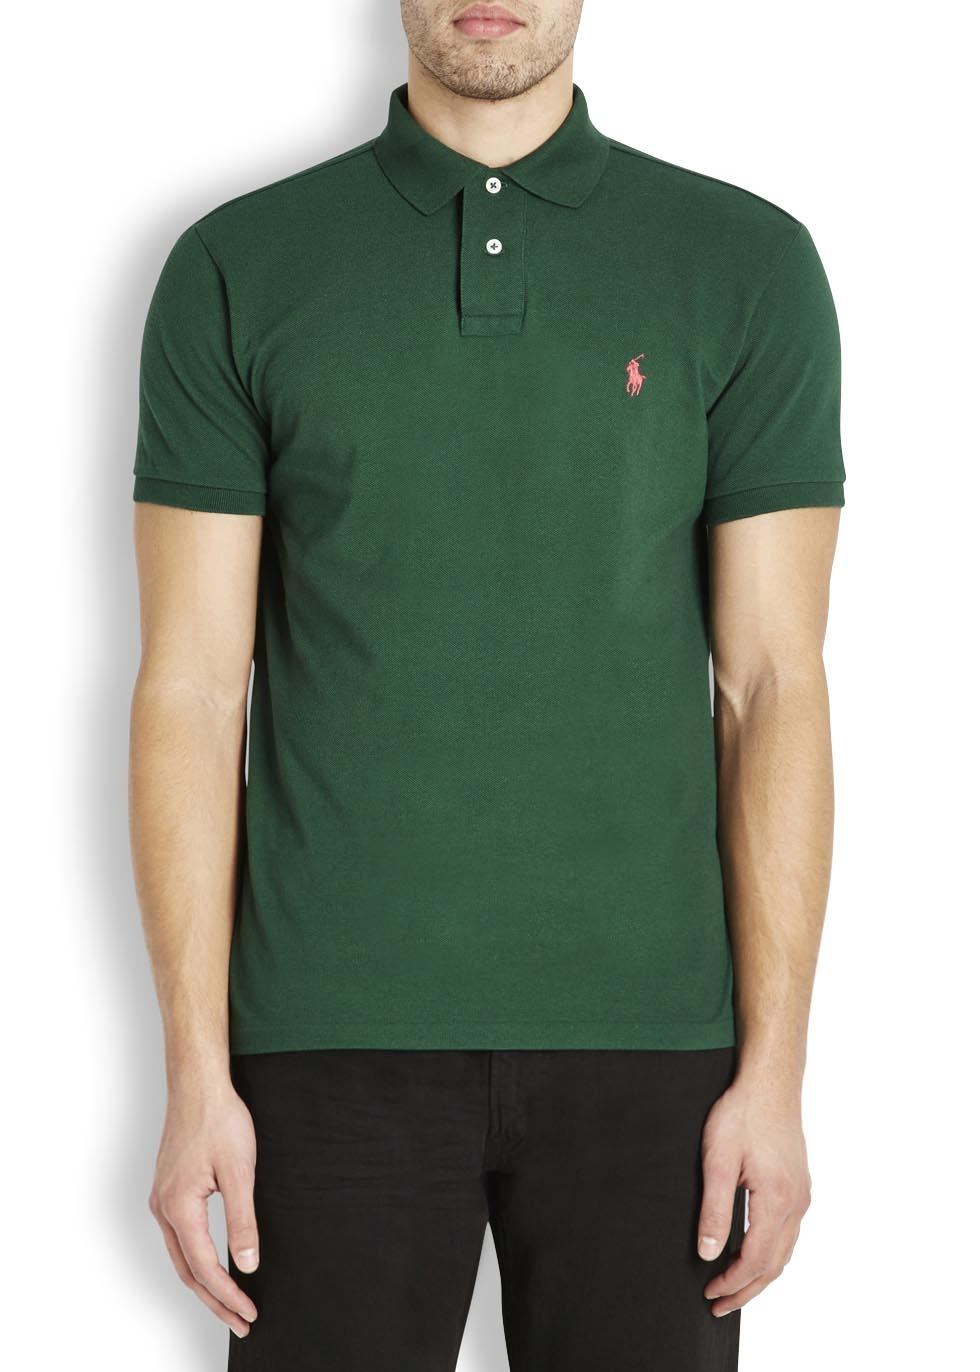 Lyst - Polo Ralph Lauren Dark Green Piqué Cotton Polo Shirt in Green ...